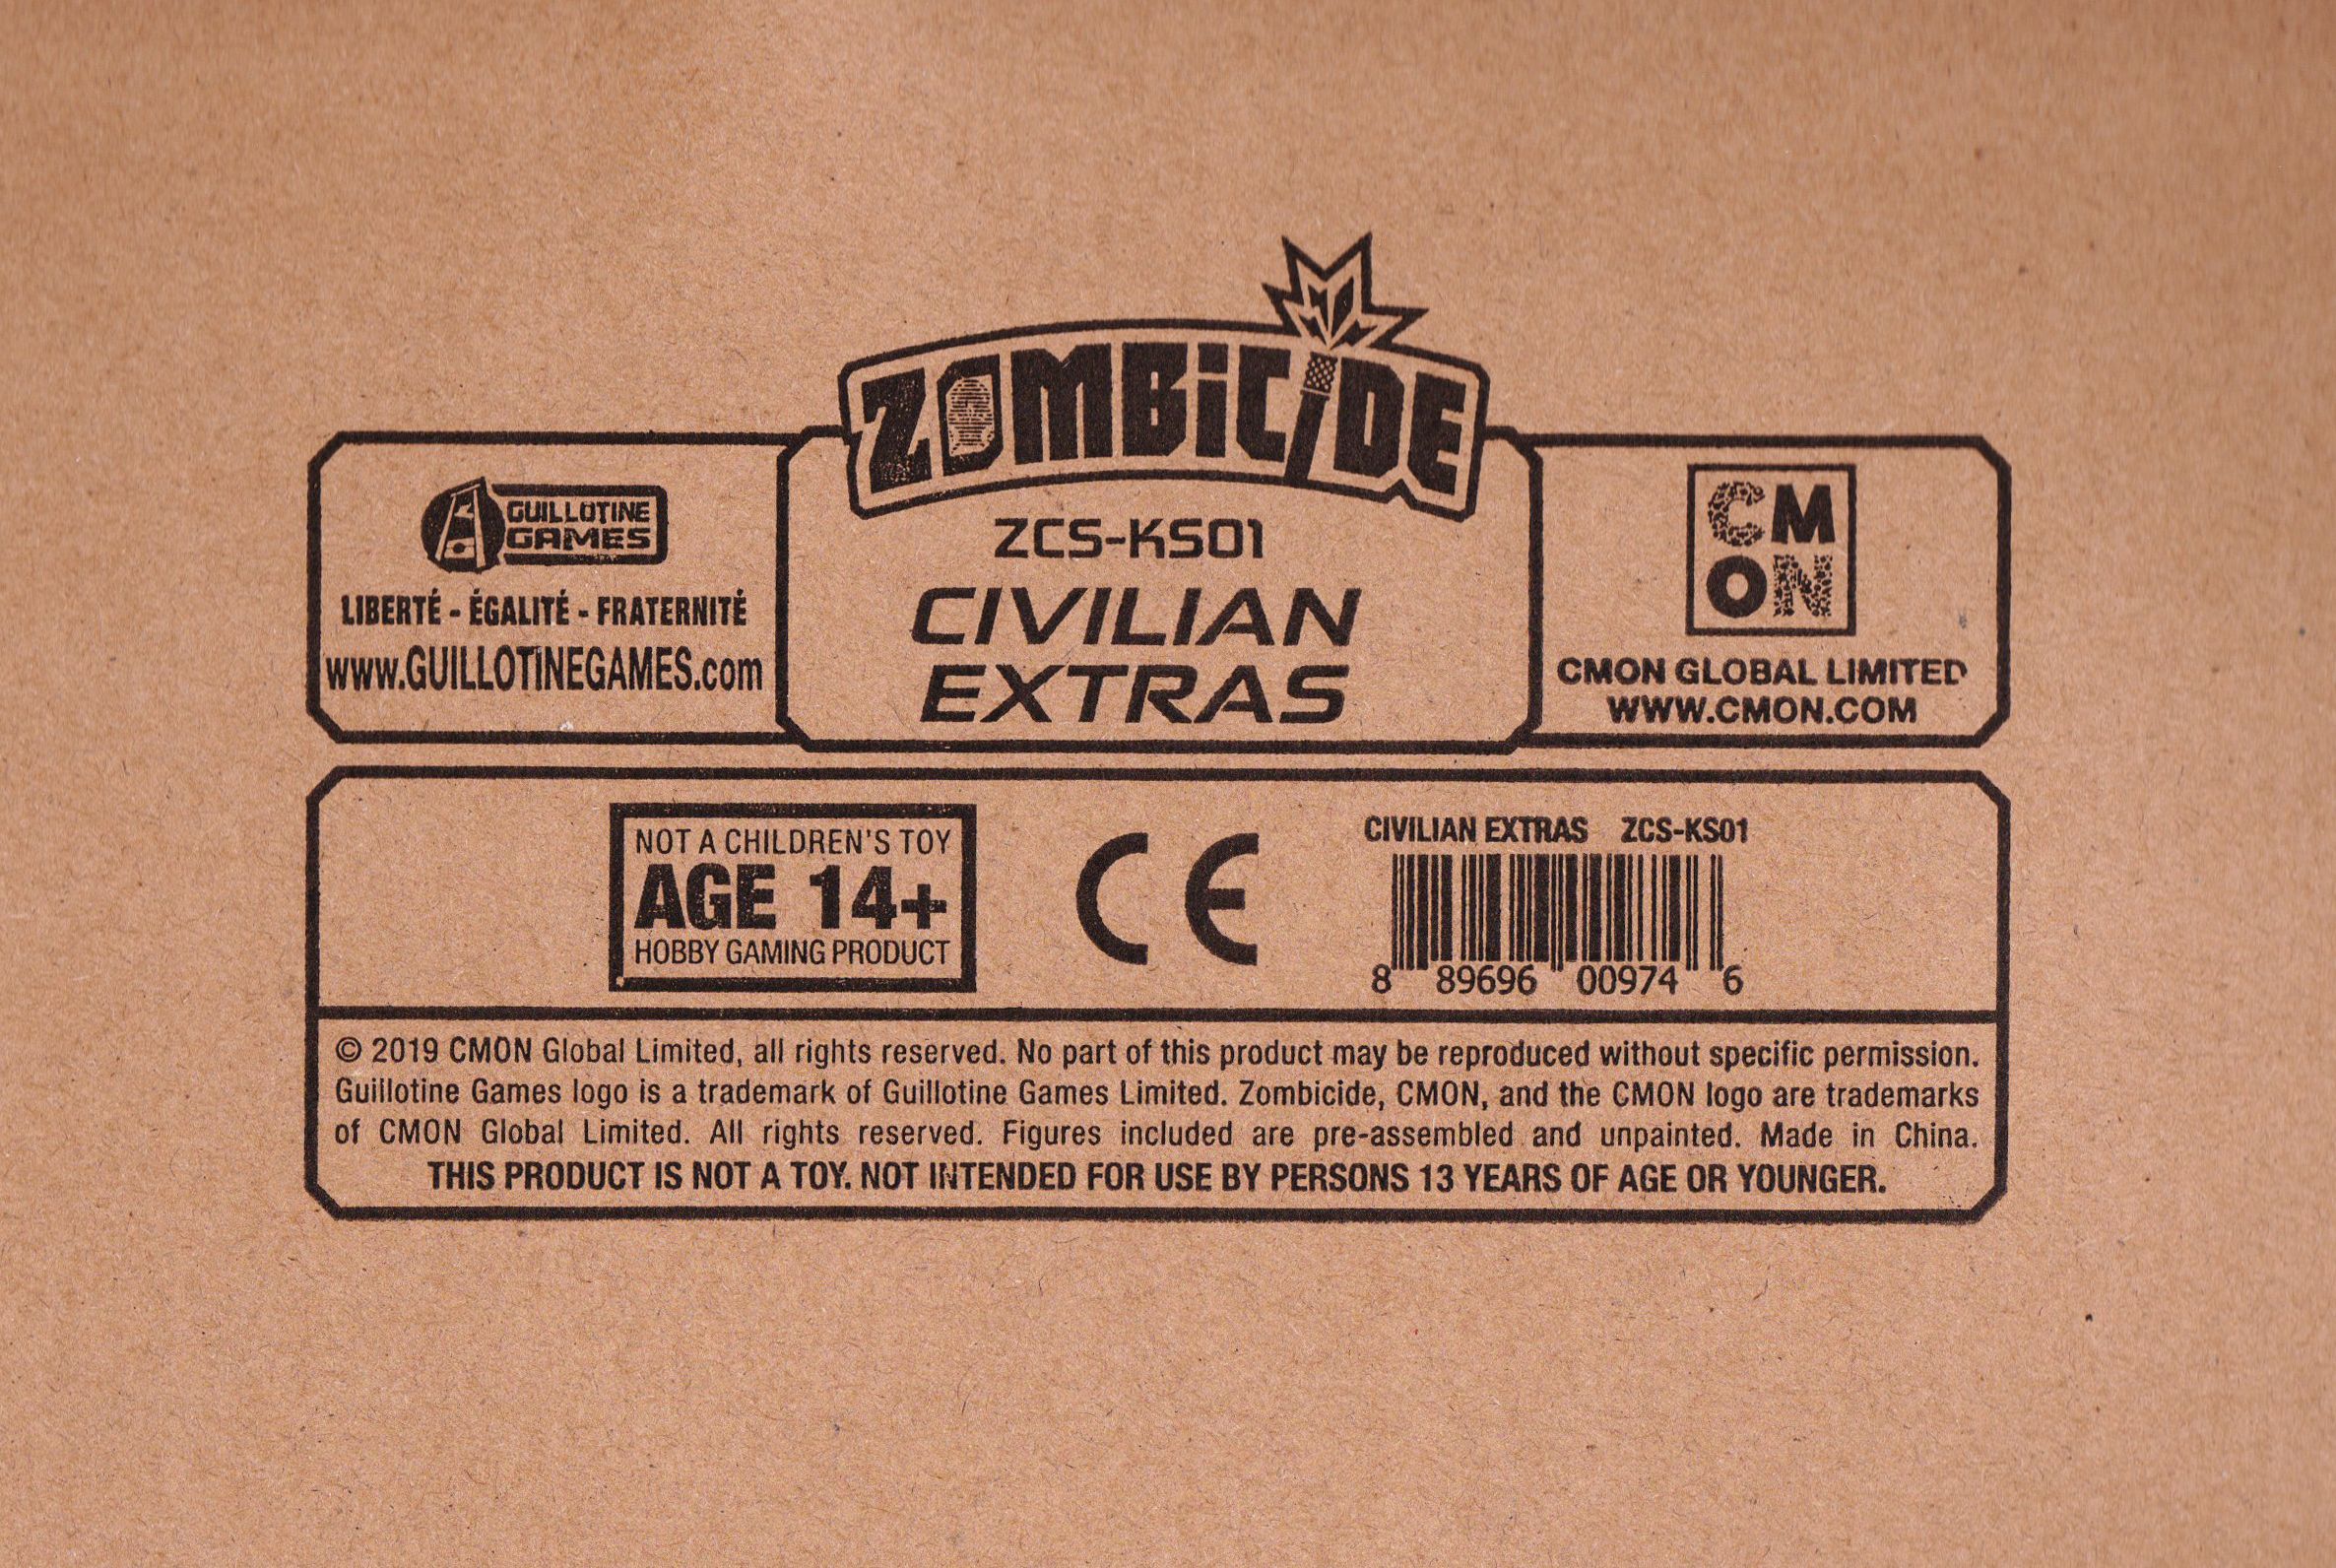 Zombicide: Invader – Civilian Extras